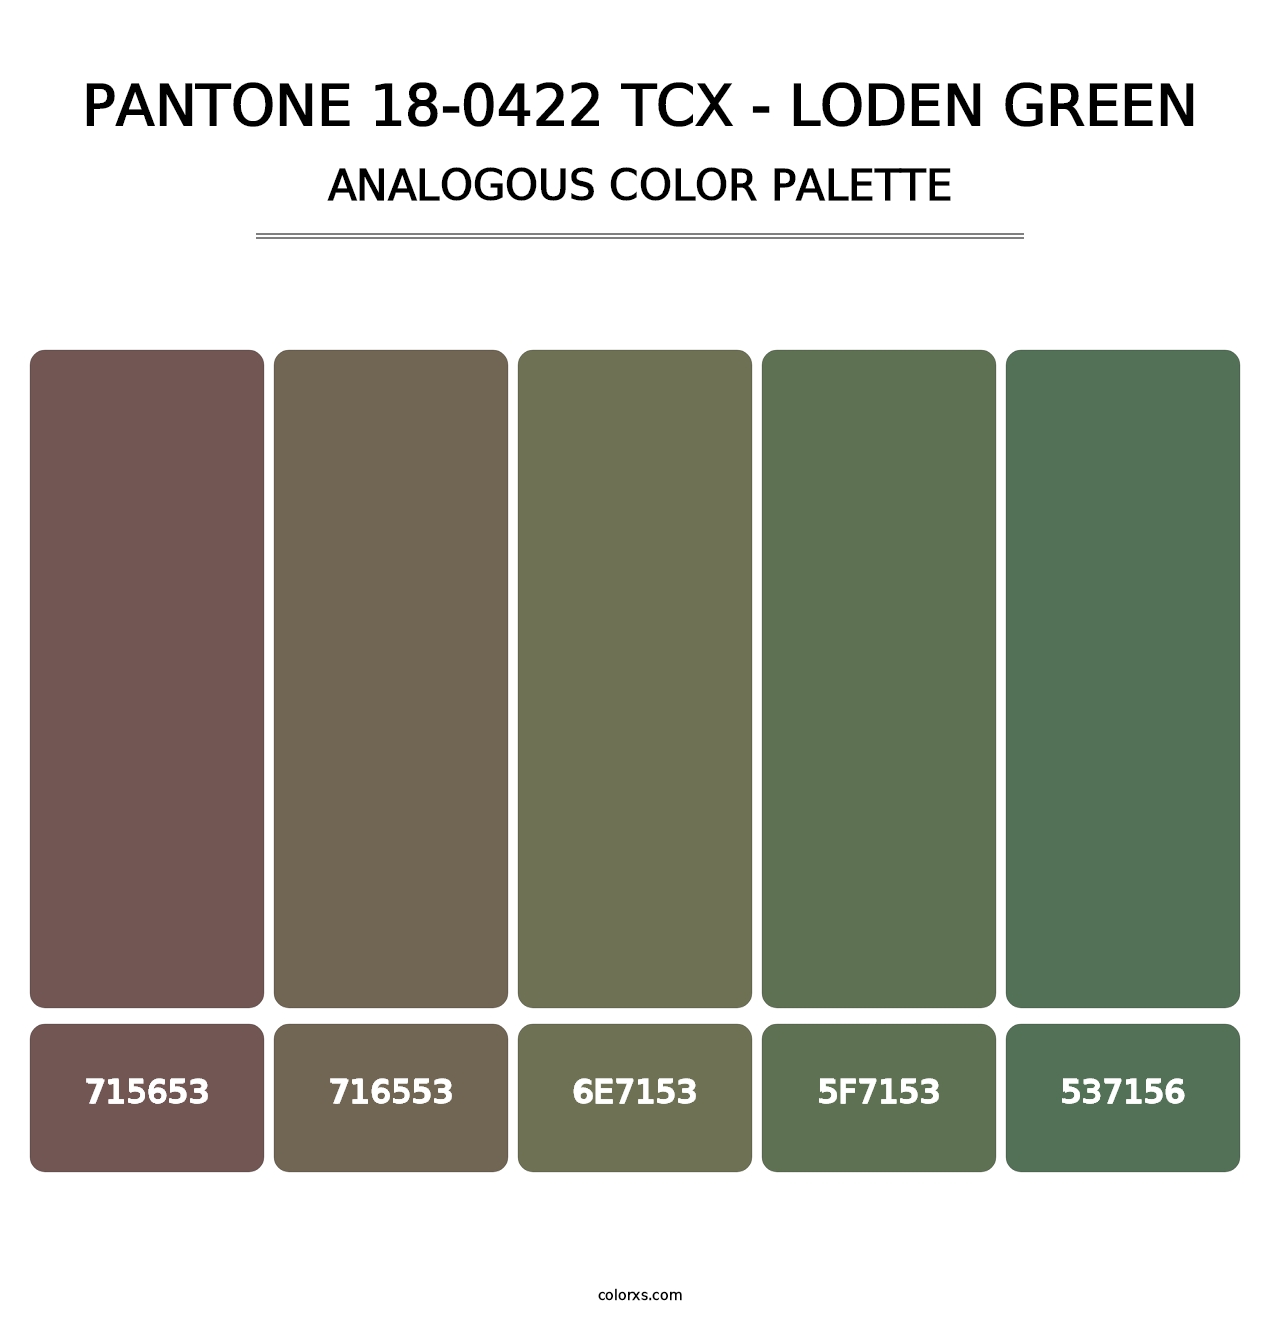 PANTONE 18-0422 TCX - Loden Green - Analogous Color Palette